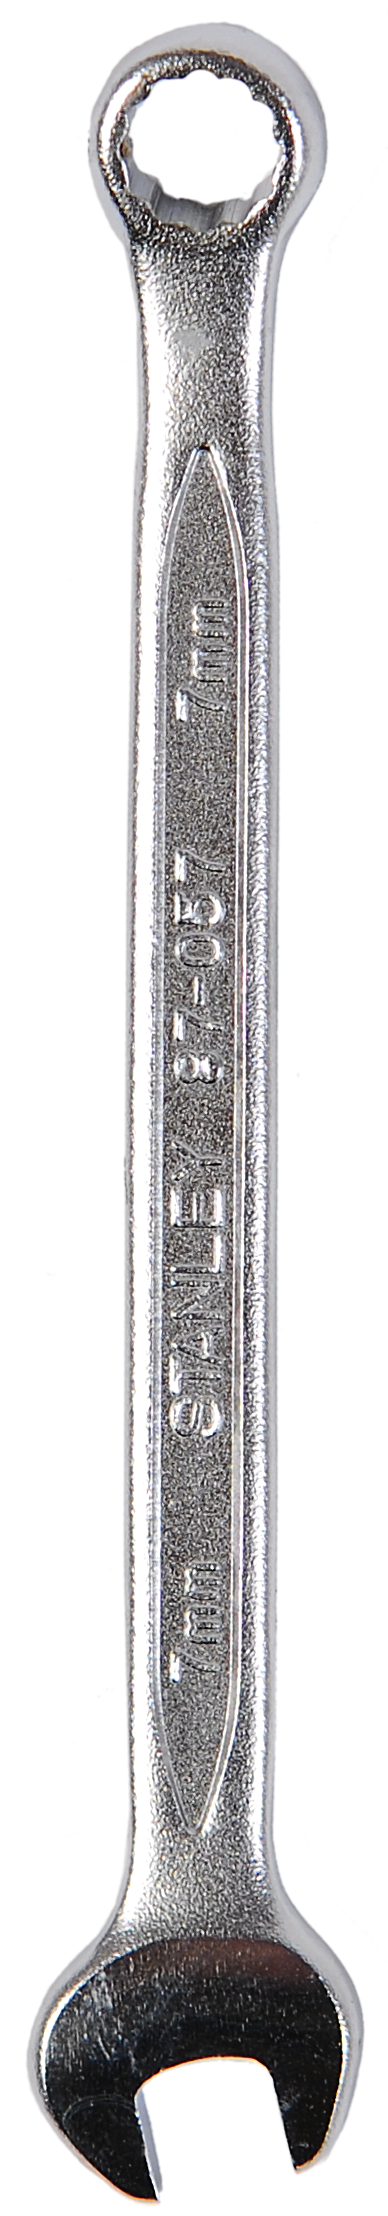 Stanley Slimline Combination Wrench 7mm